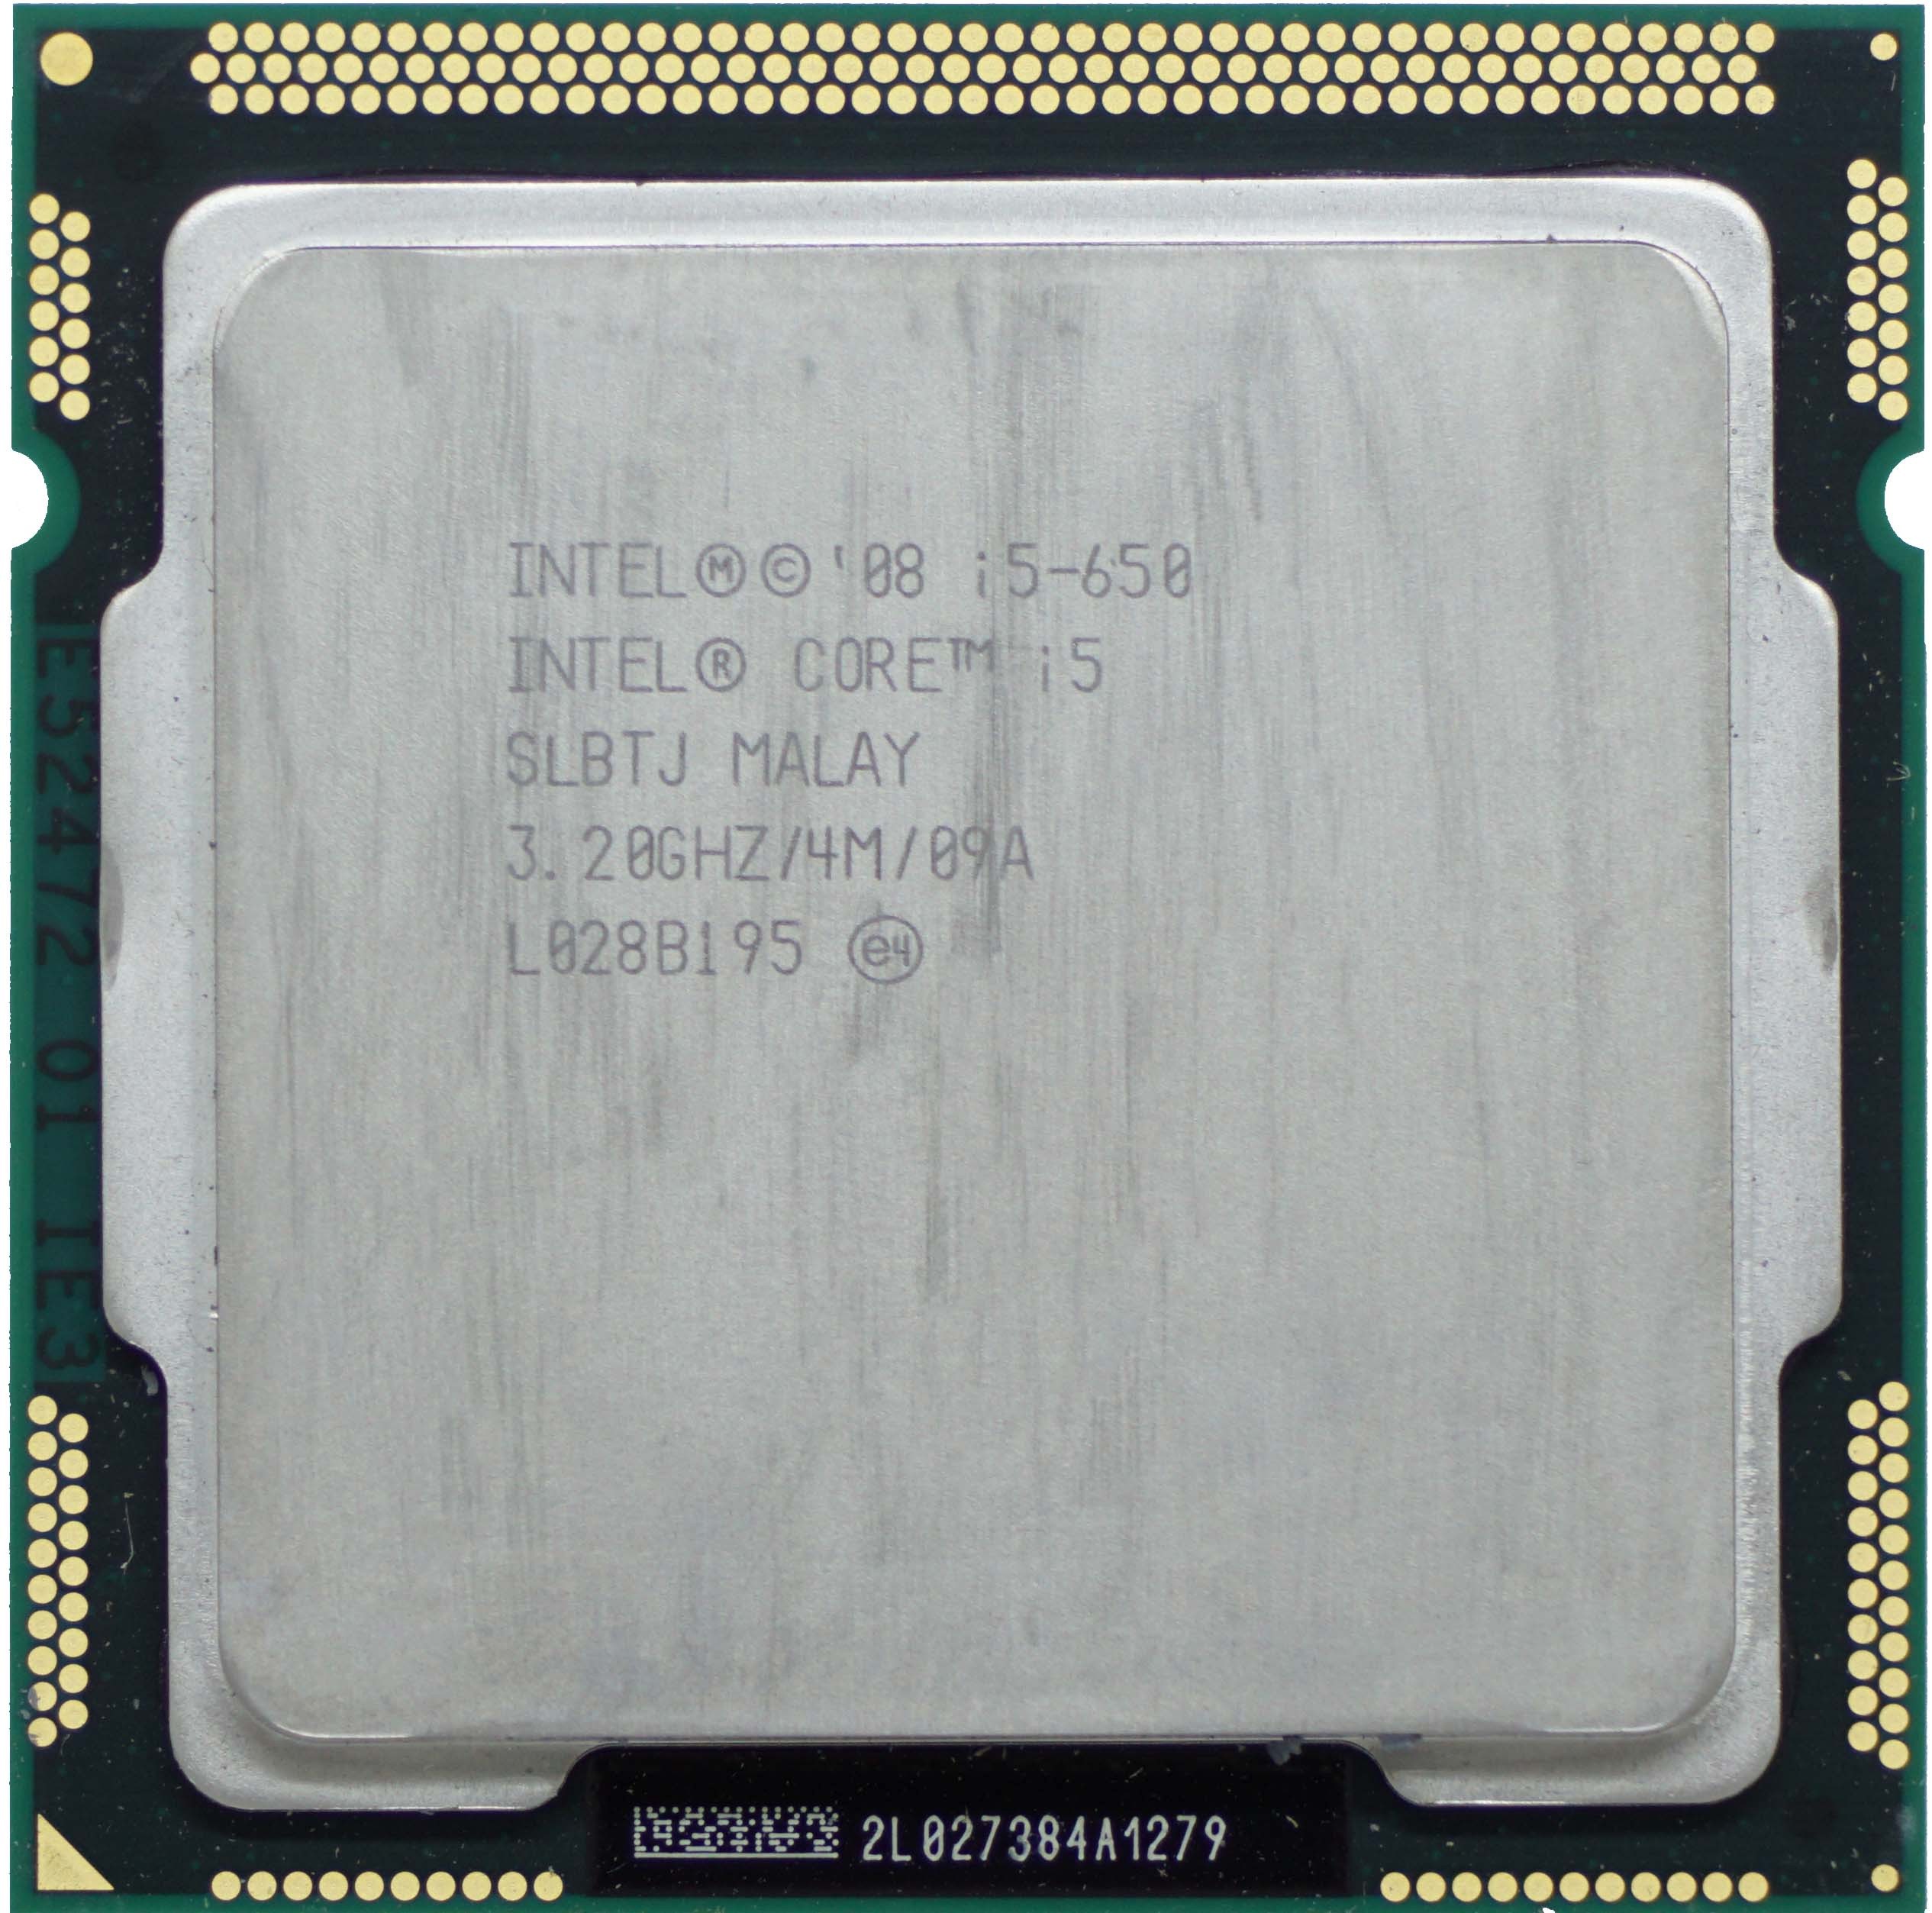 Intel Core i5-650 (SLBTJ) 3.20Ghz Dual (2) Core LGA1156 73W CPU